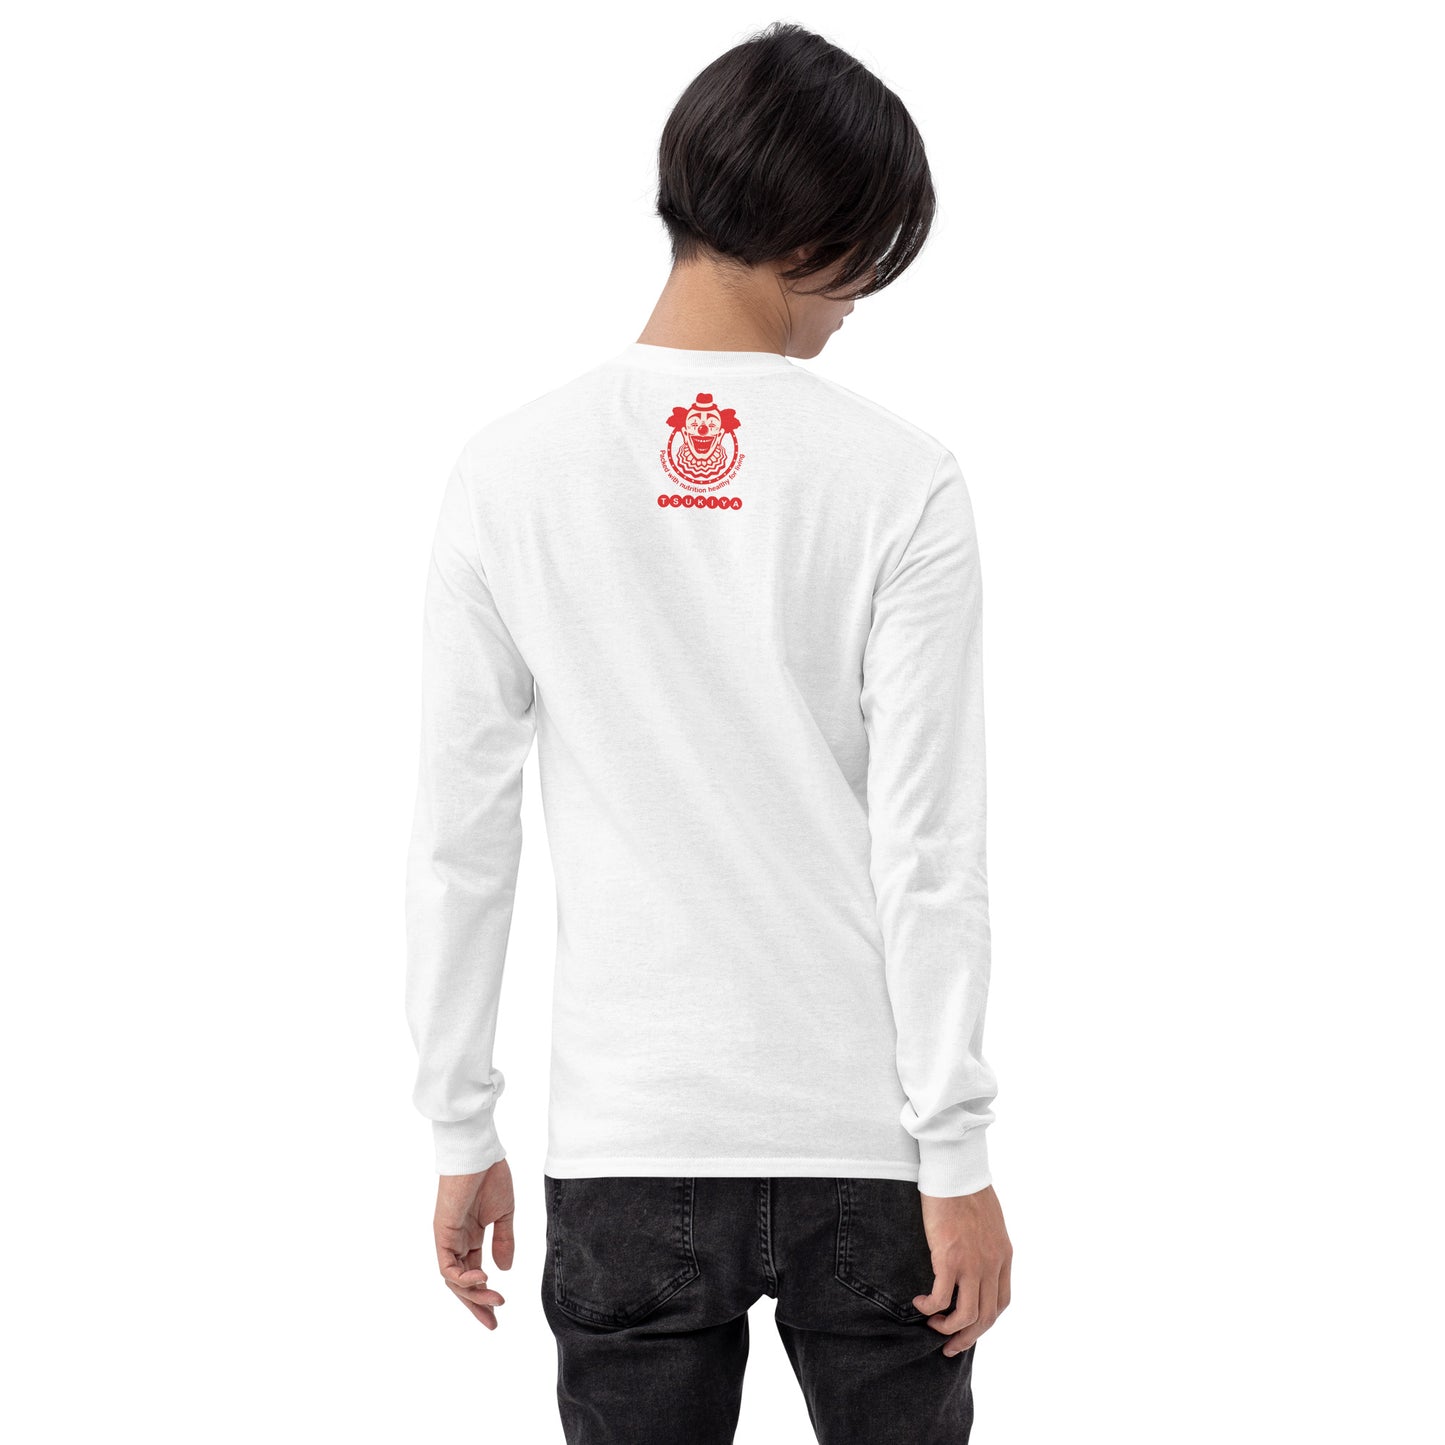 NEW / 戸隠つきやオリジナル  6周年アニバーサリーサーカス 長袖Tシャツ ユニセックス